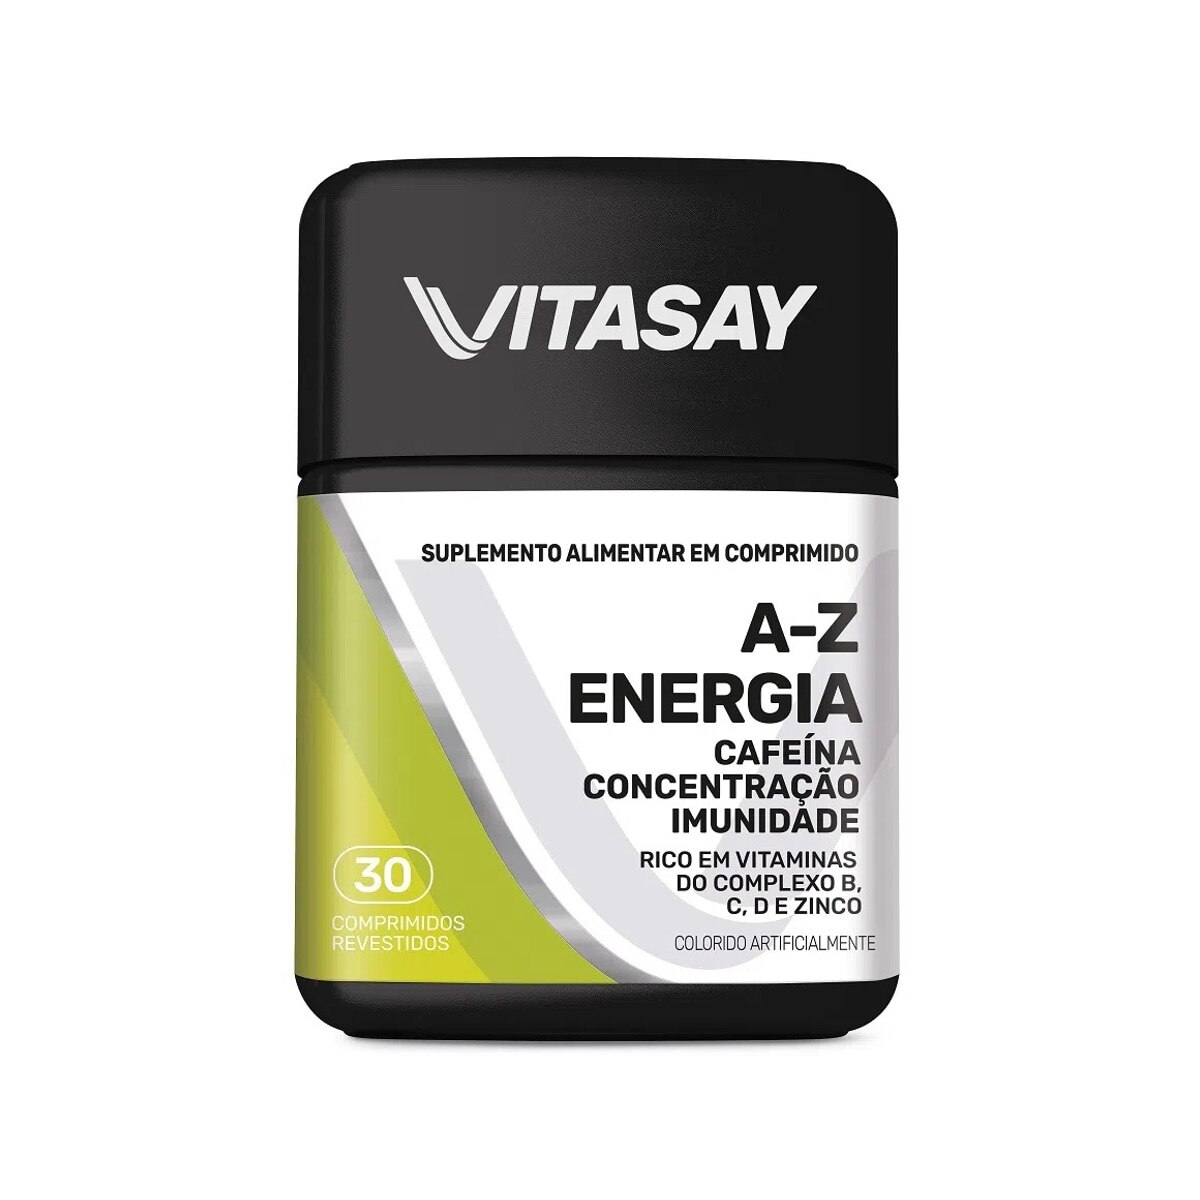 Vitasay A-Z Energia 30 Comprimidos Revestidos